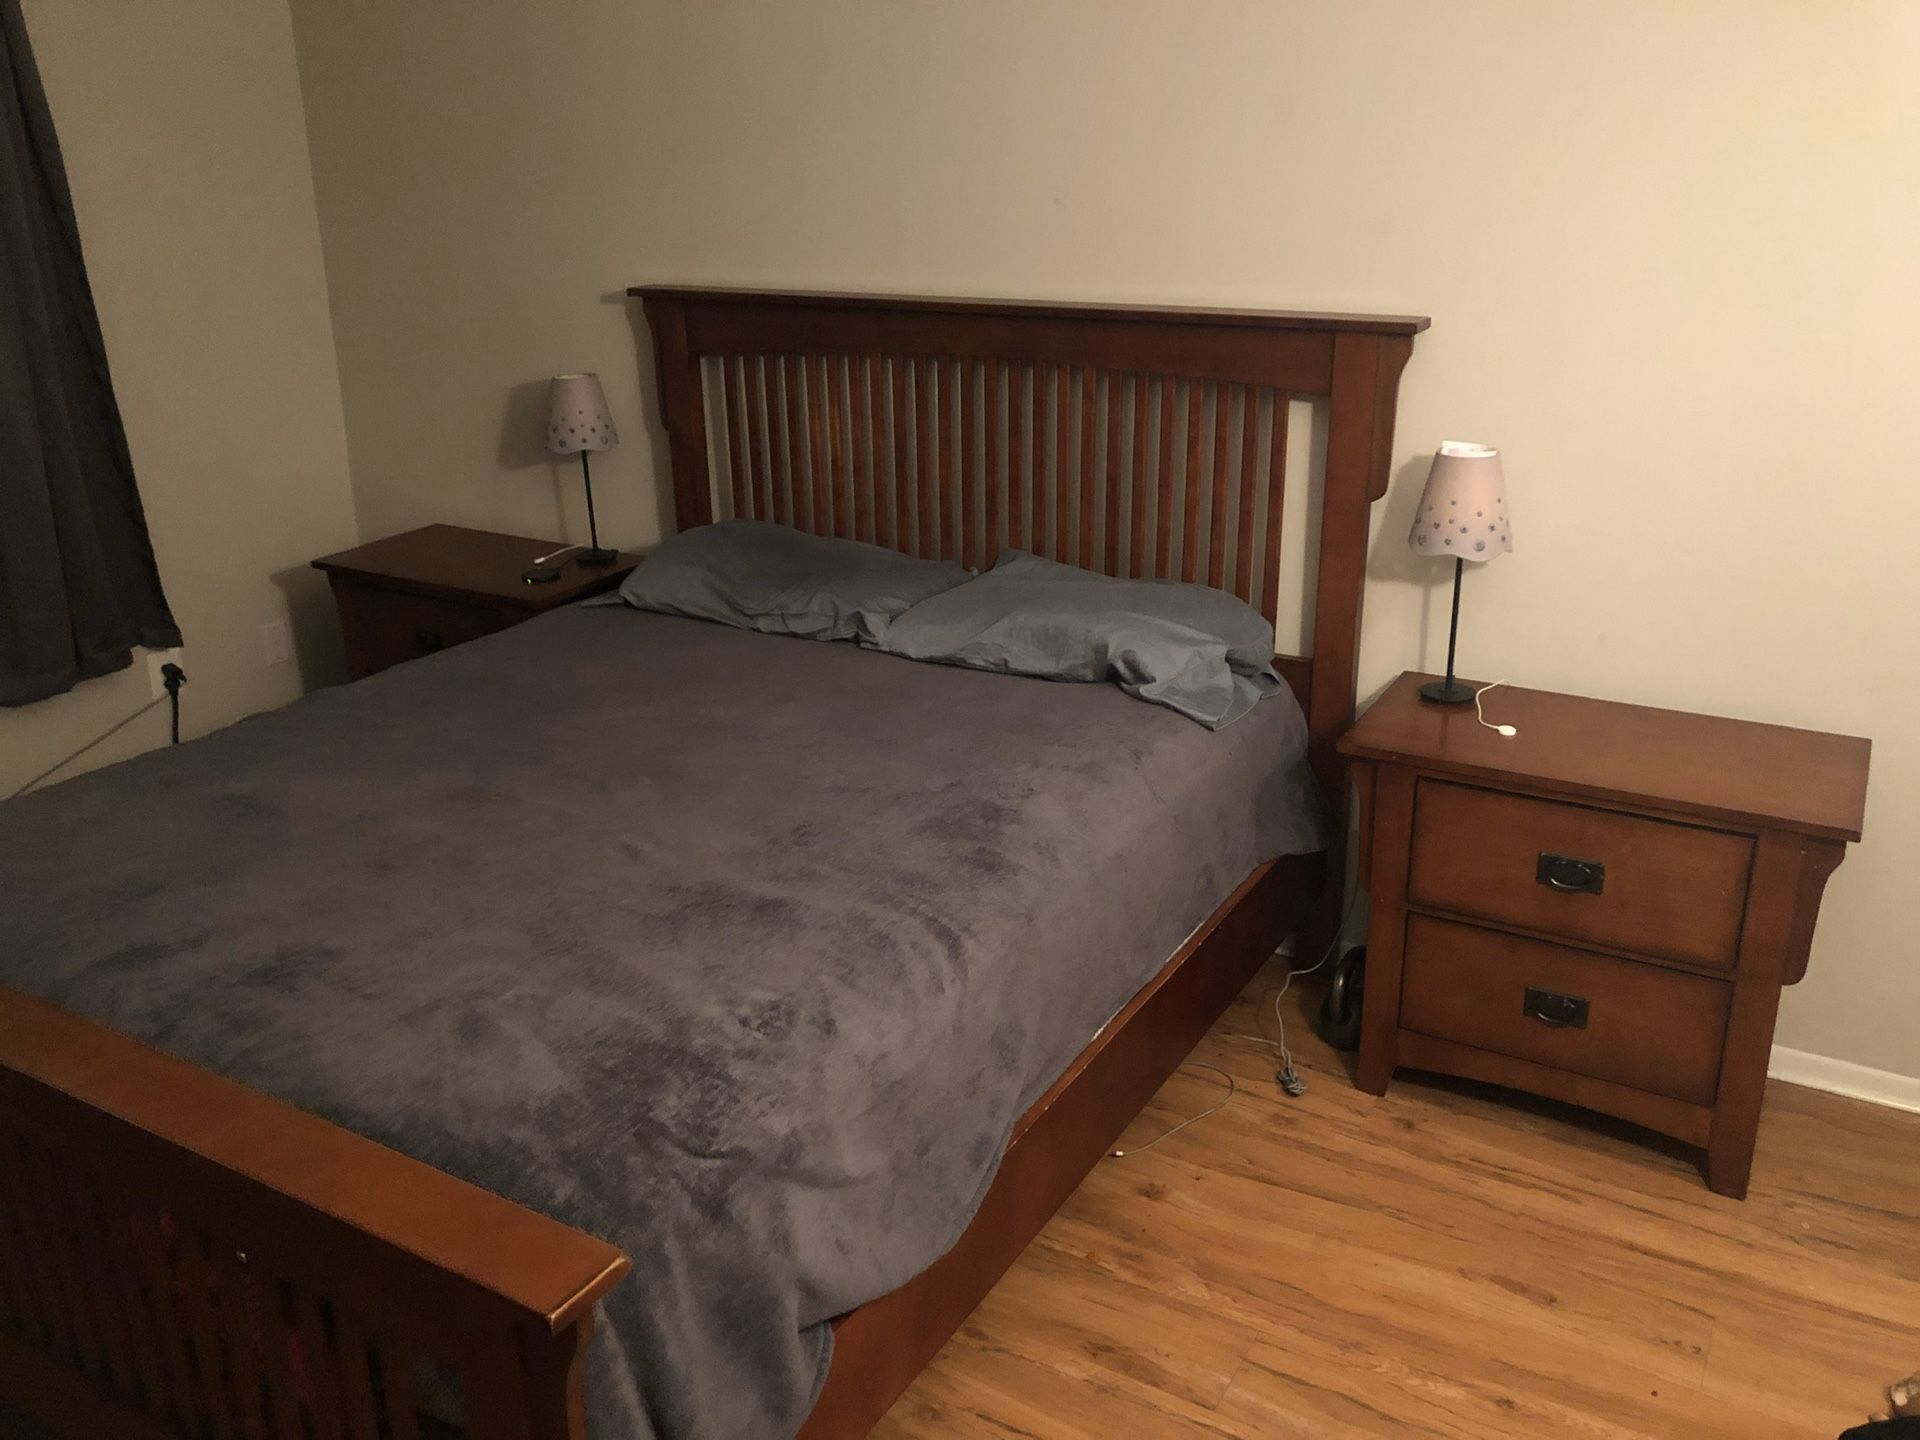 Queen bed frame and nightstands